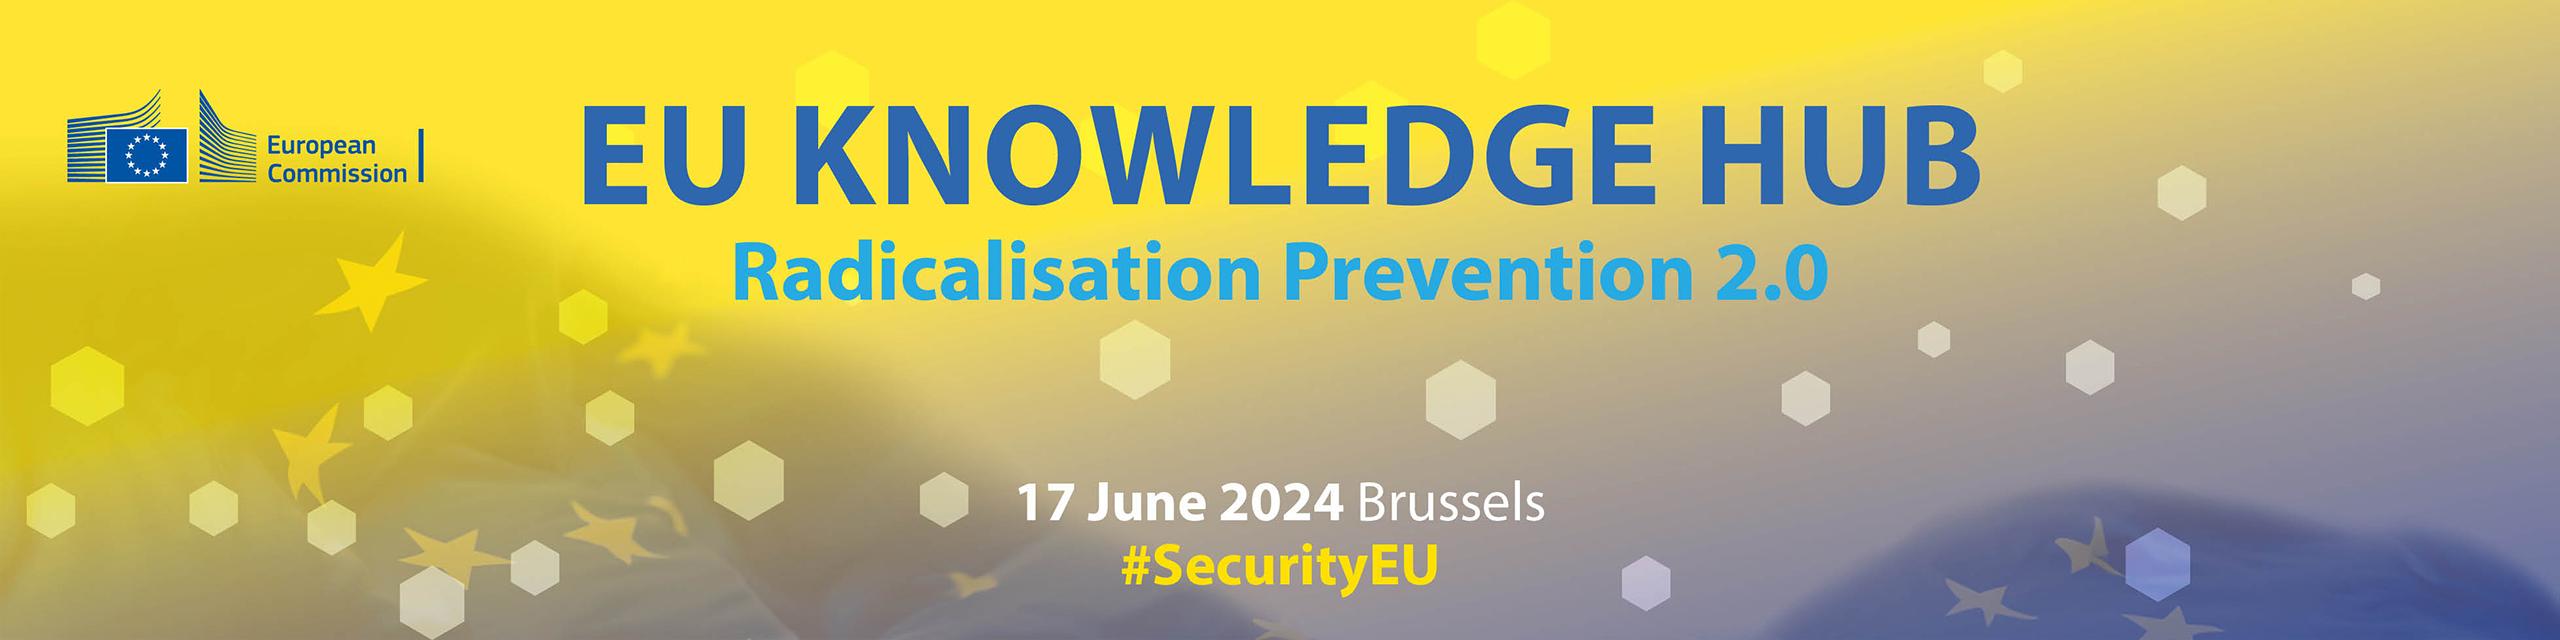 EU Knowledge Hub banner